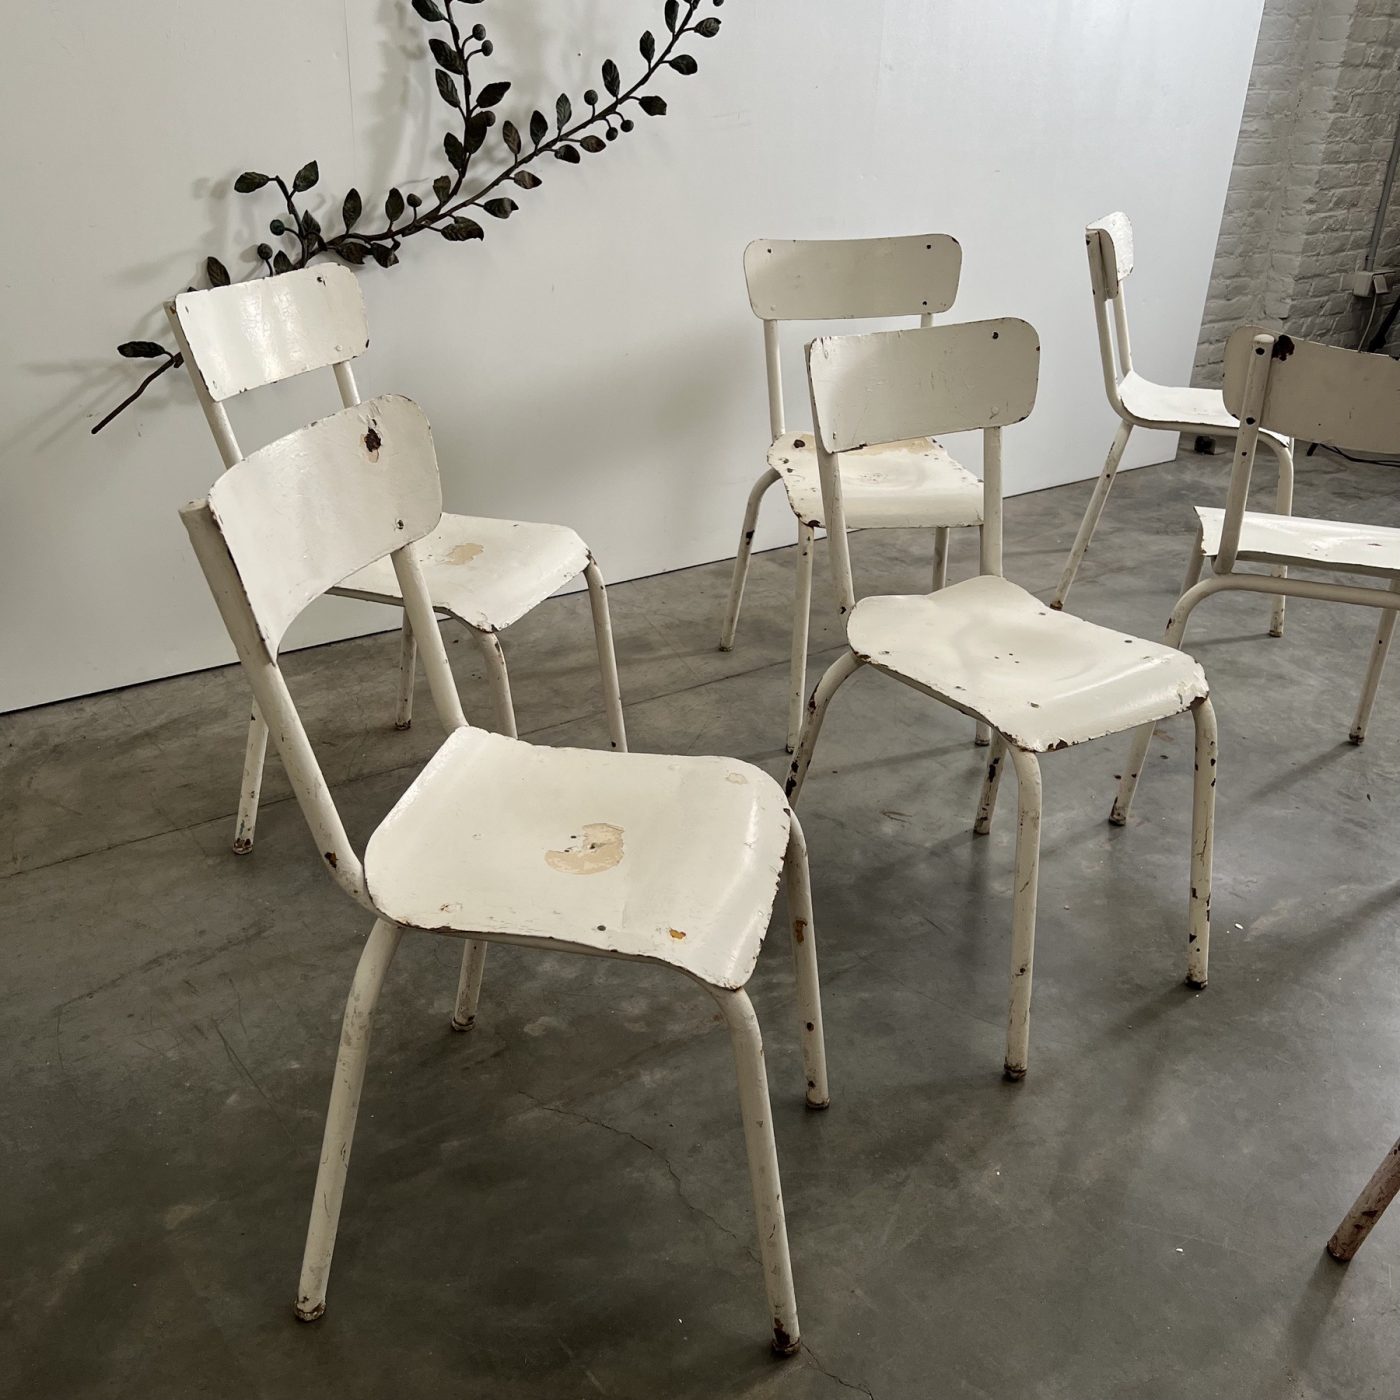 objet-vagabond-metal-chairs0005